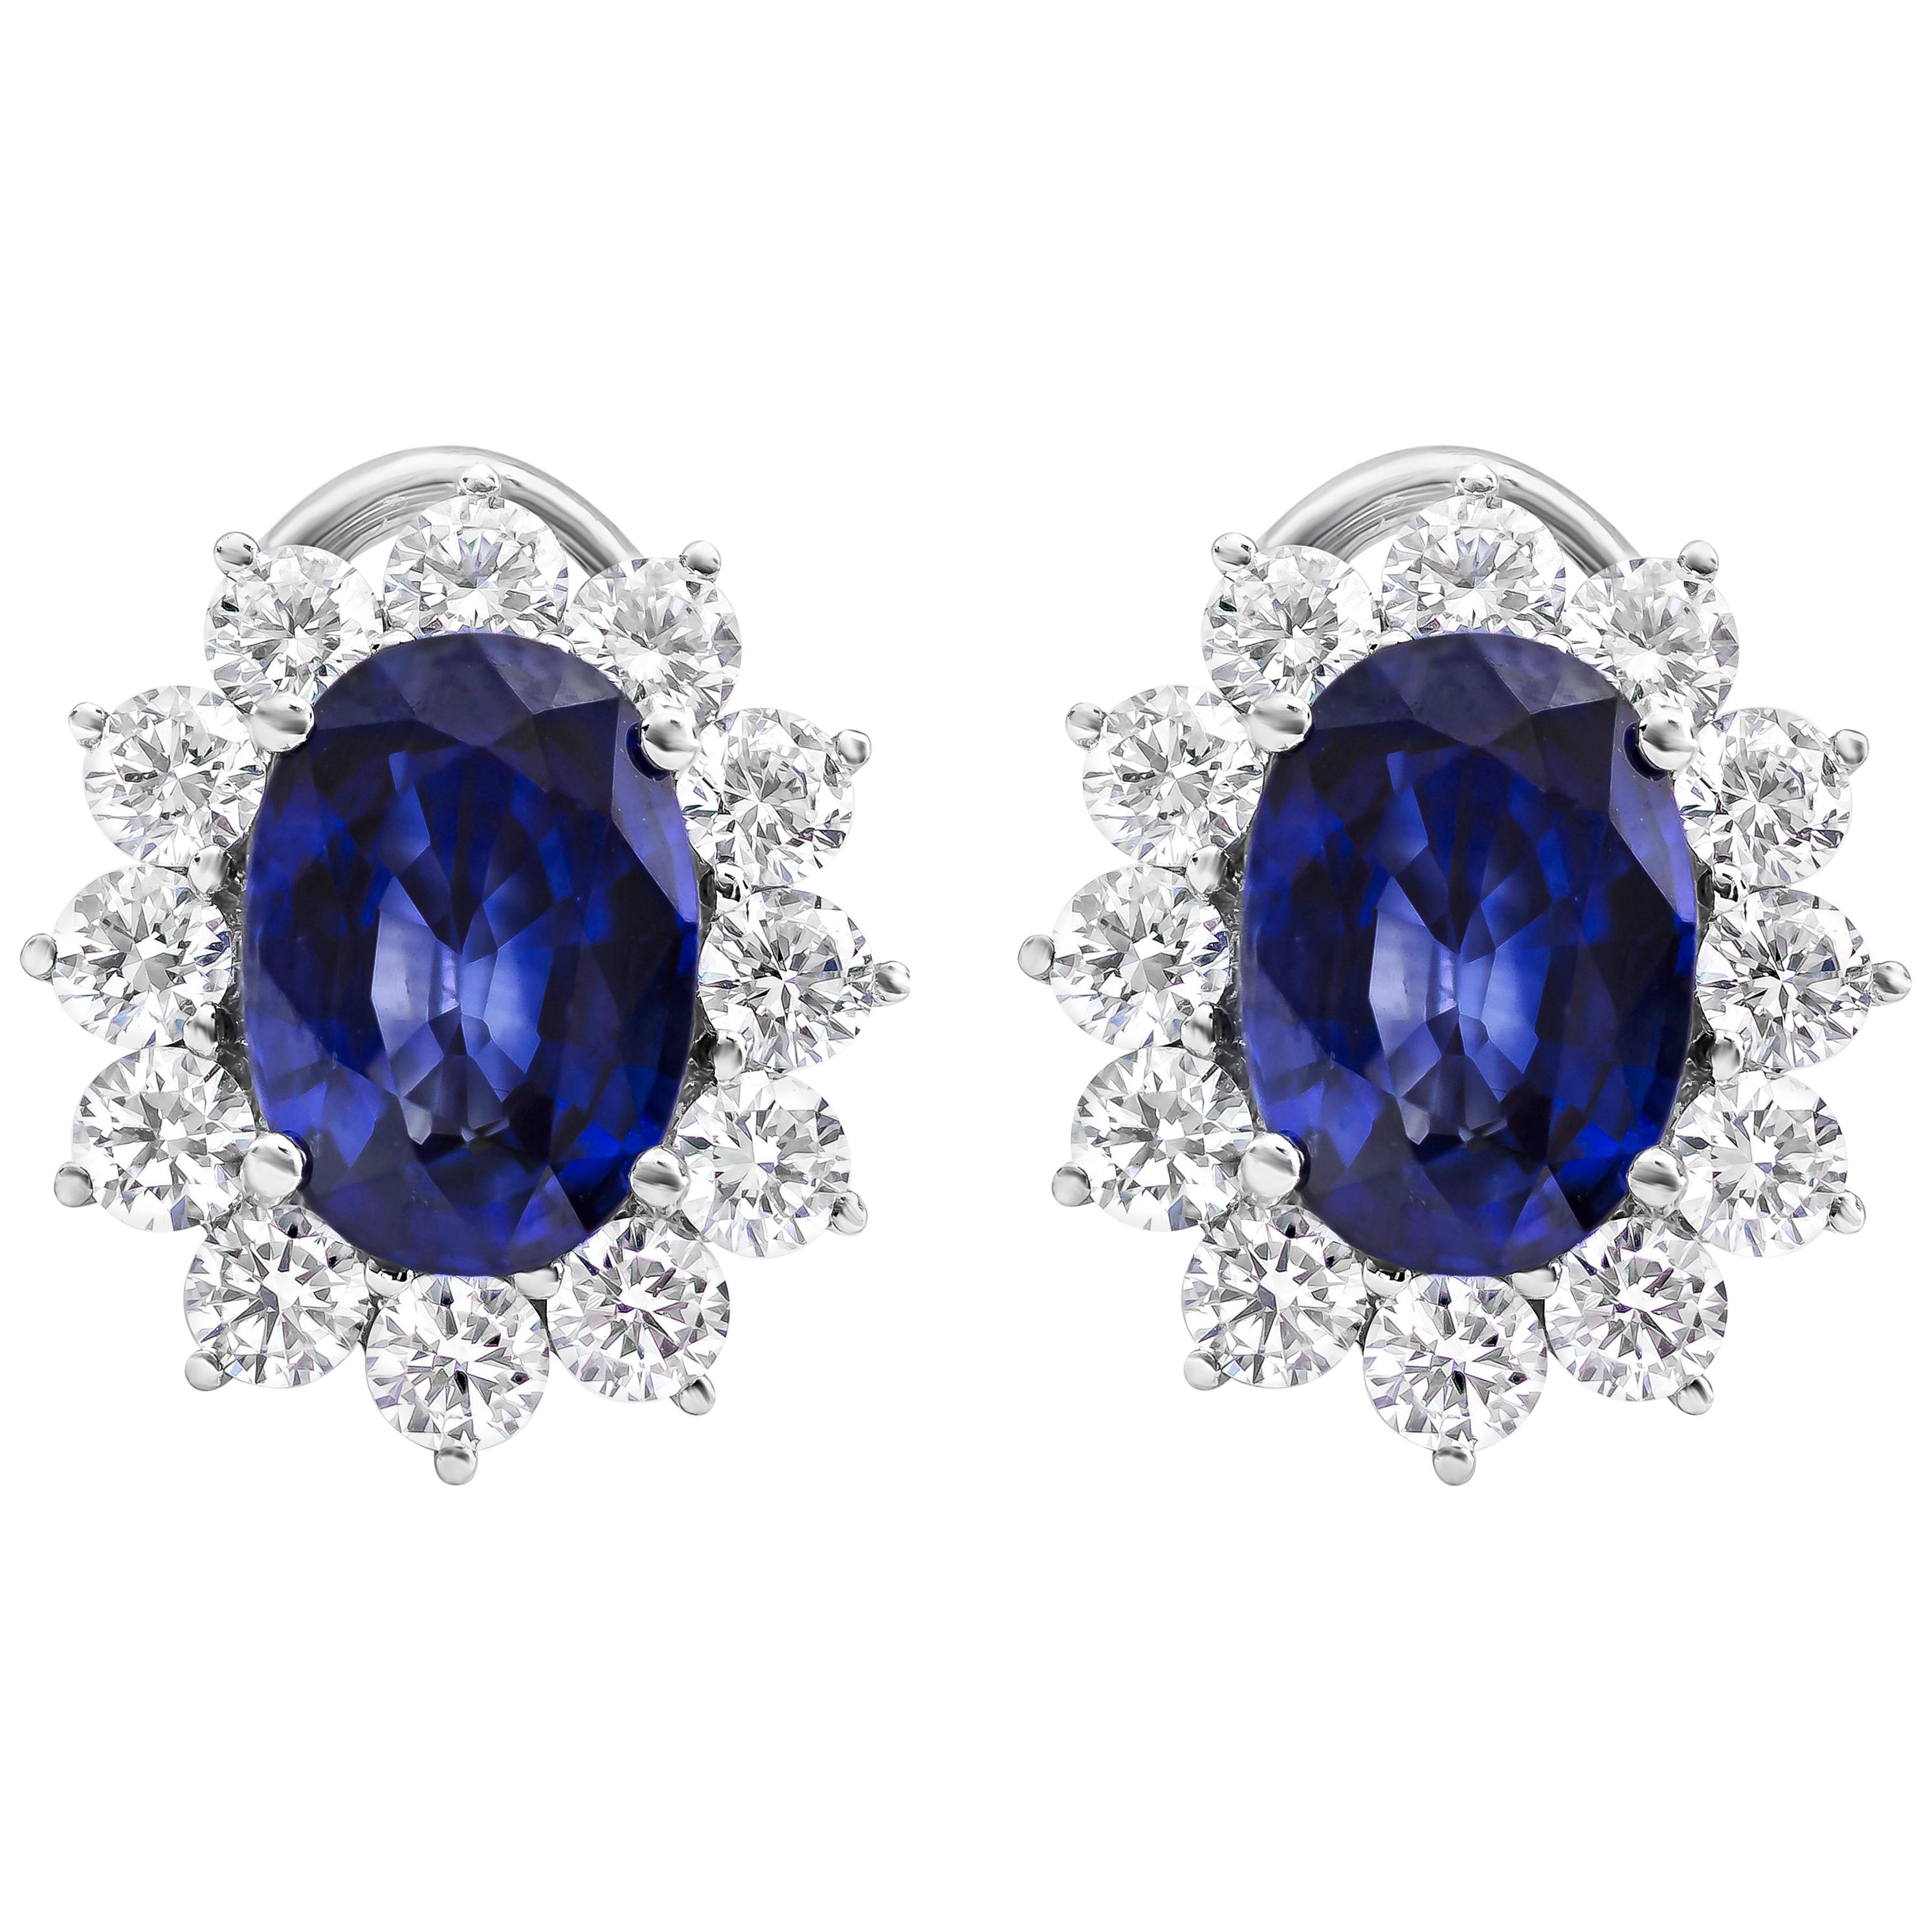 Roman Malakov 3.96 Carats Total Oval Cut Blue Sapphire and Diamond Clip Earrings